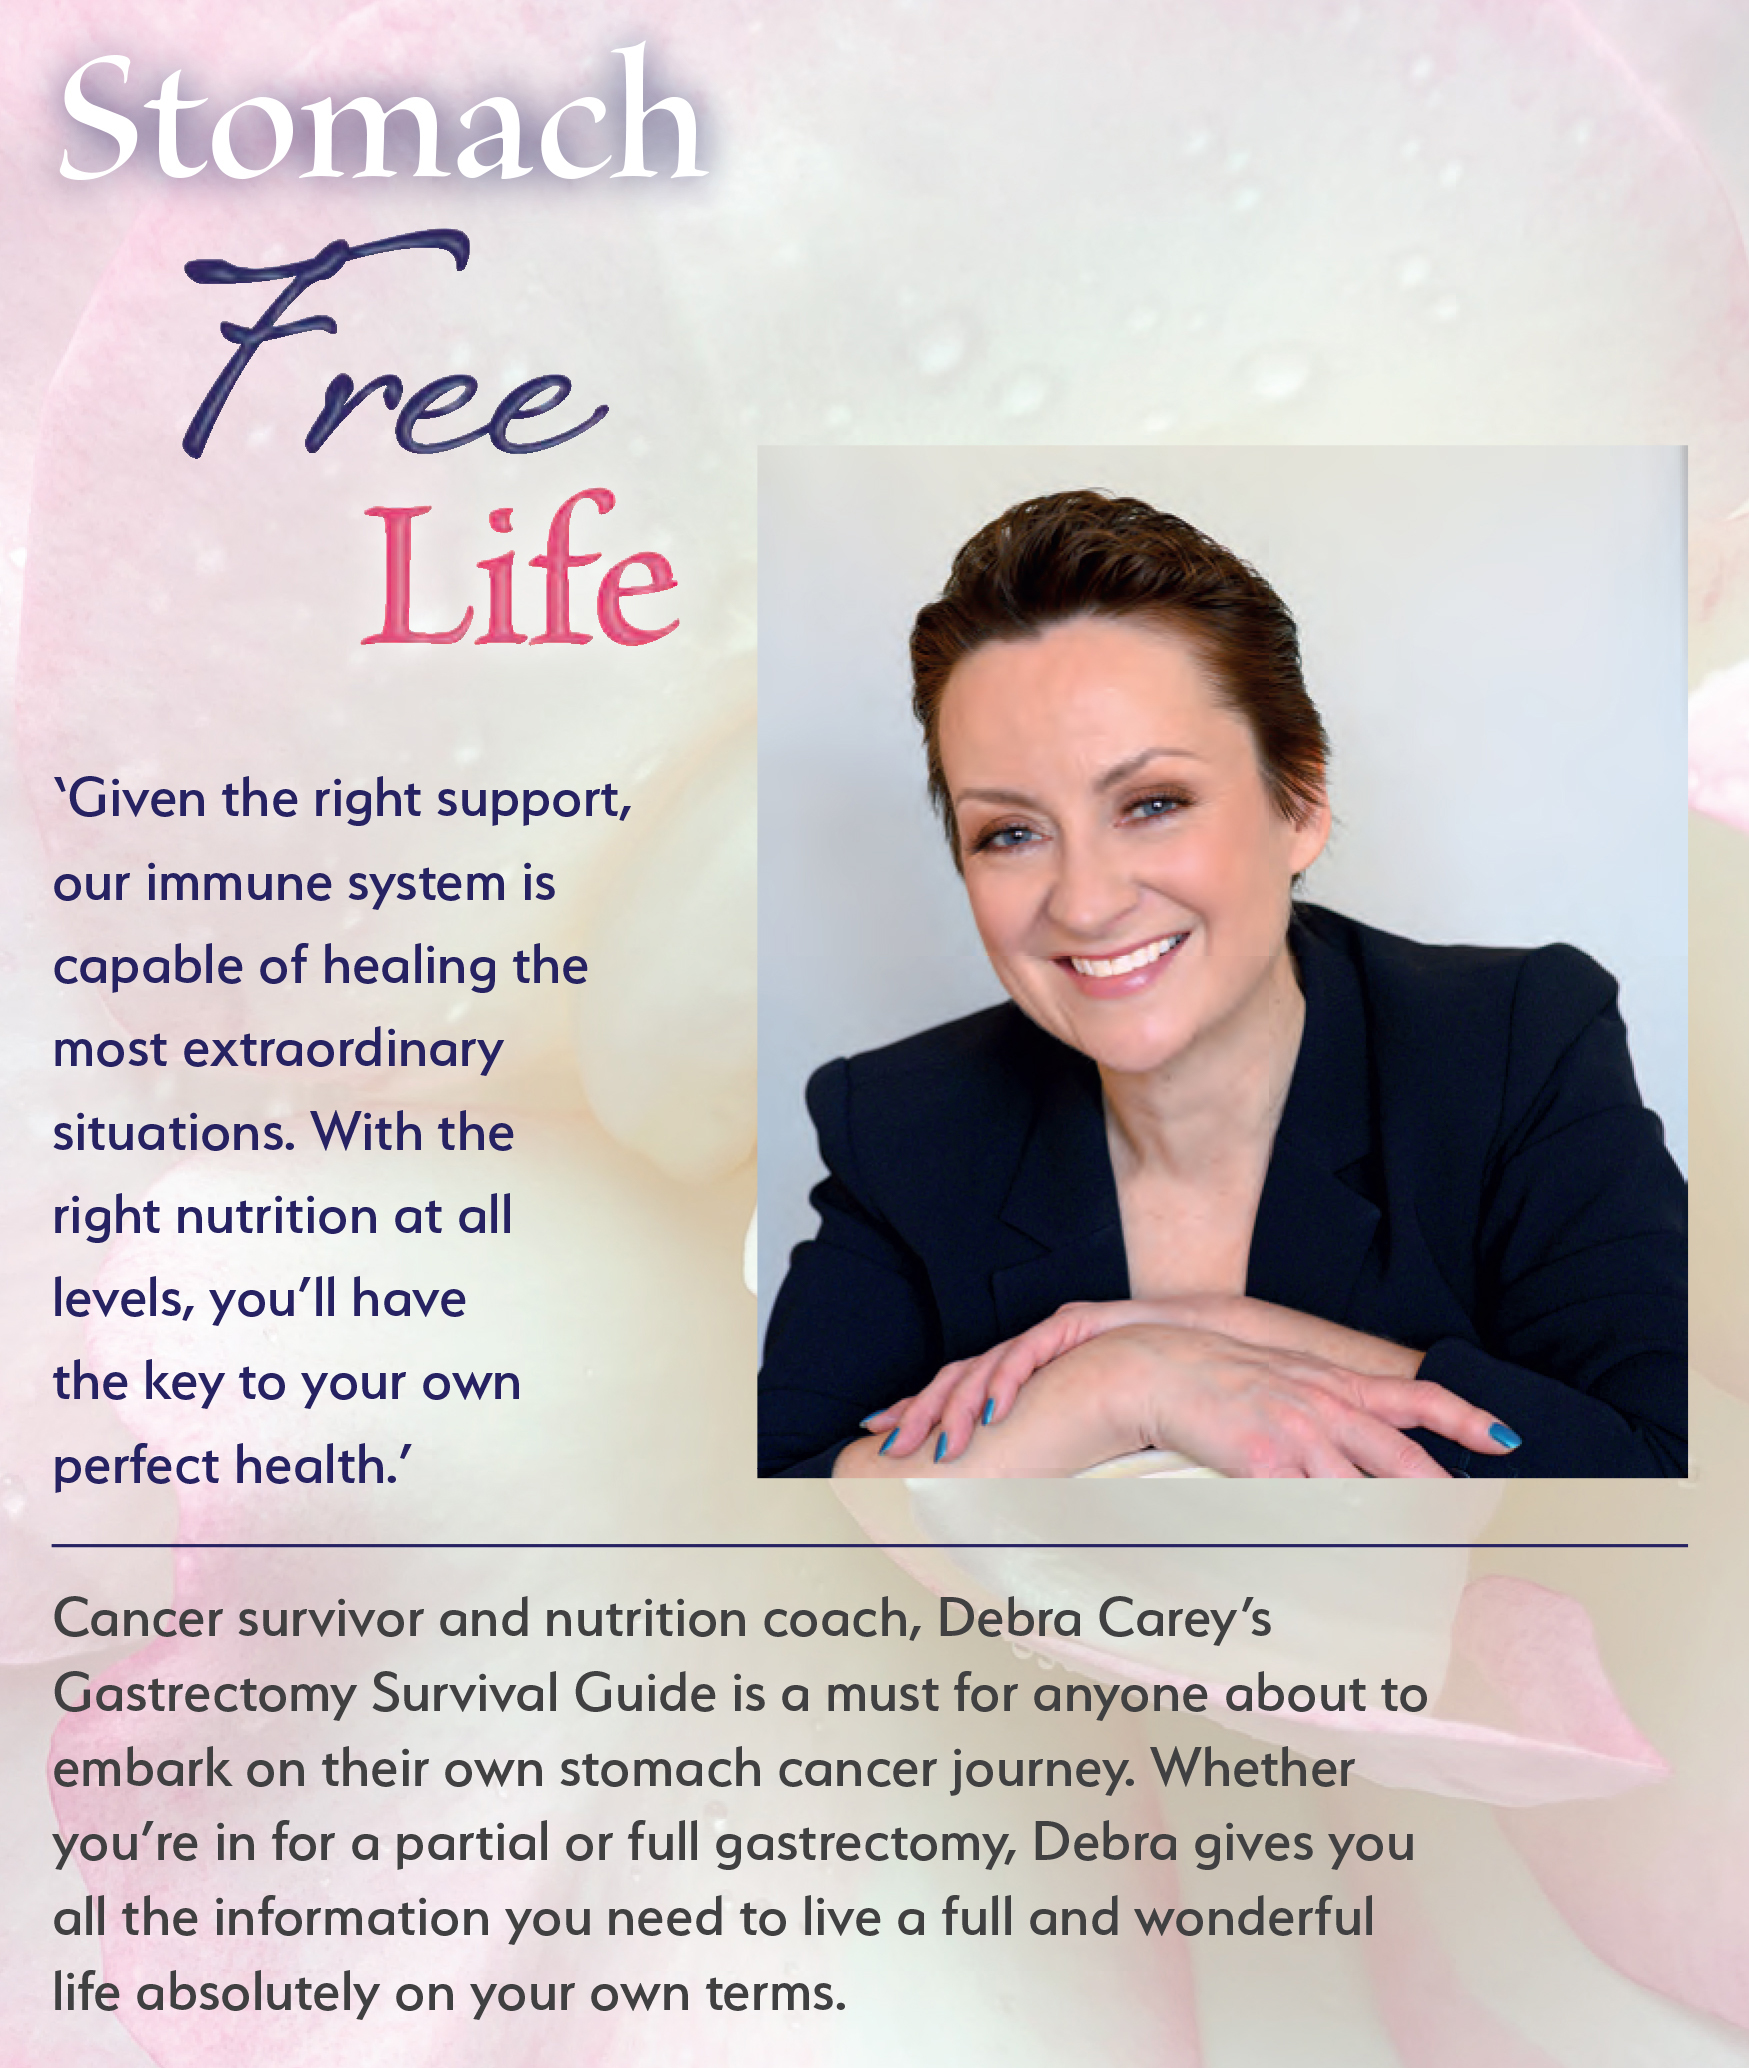 Stomach Free Life author Debra Carey